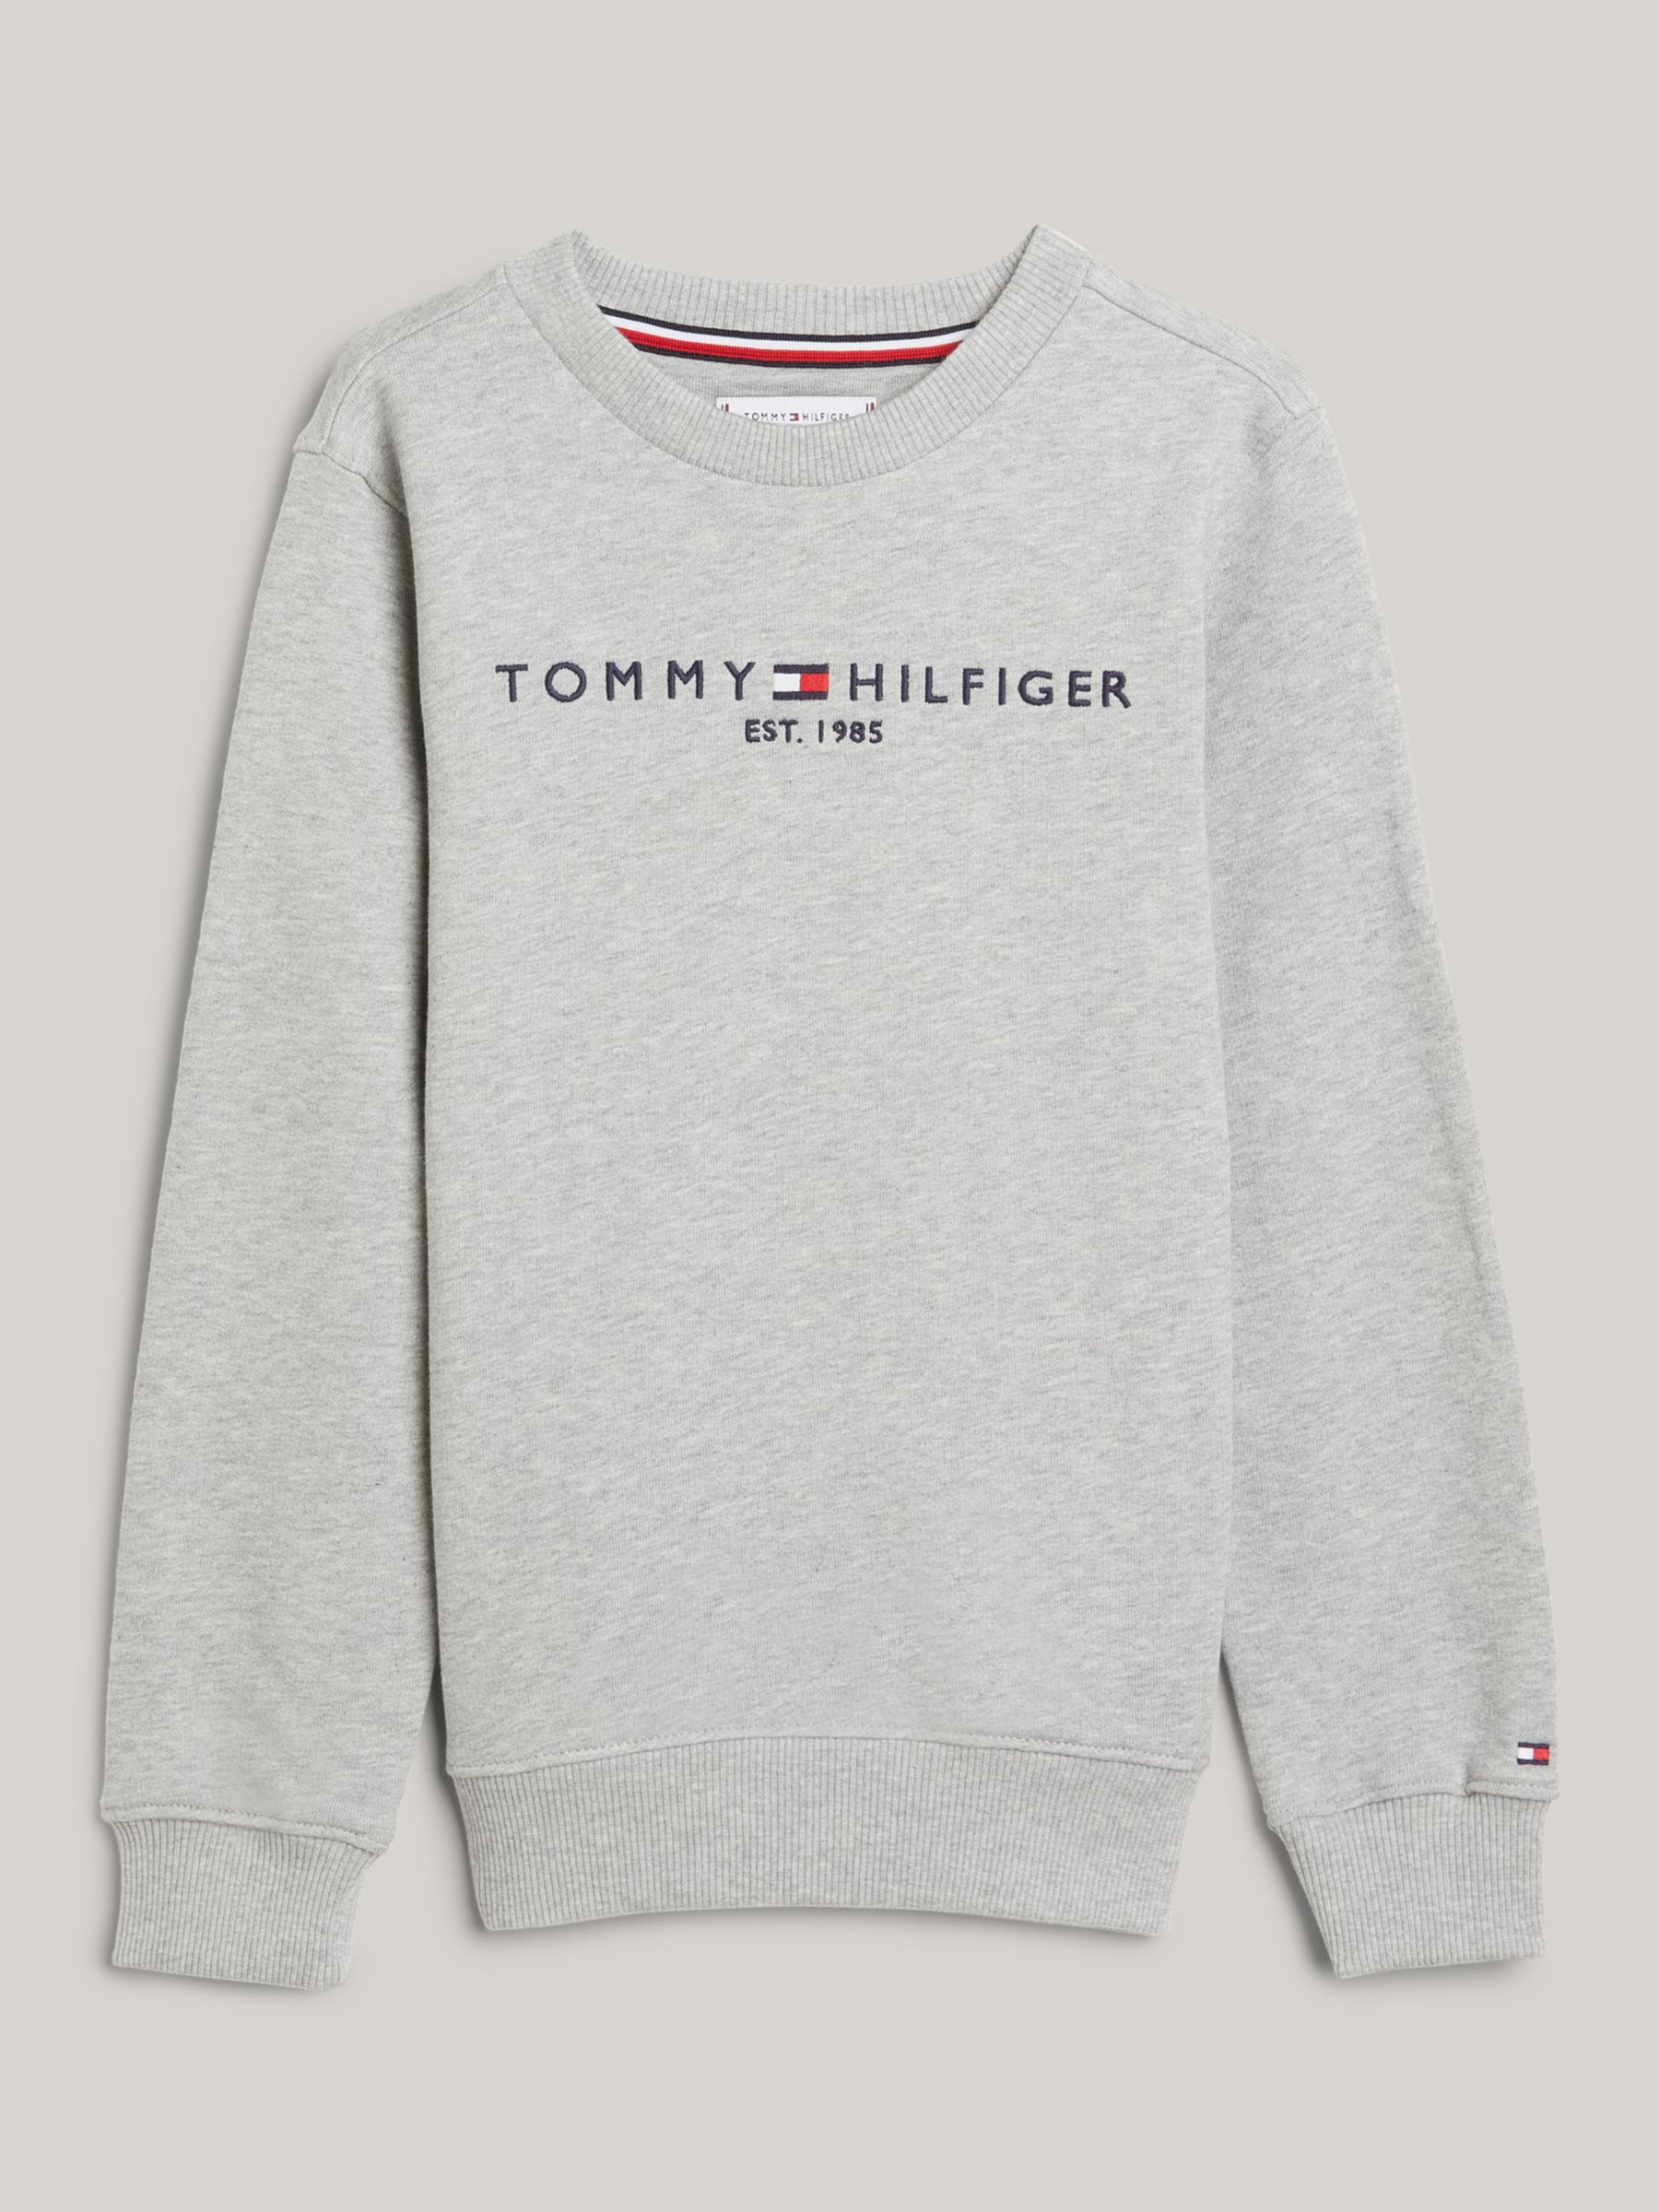 Tommy Hilfiger Kids\' Light Lewis Heather Sweatshirt, at Grey Logo Organic & Partners Essential John Cotton